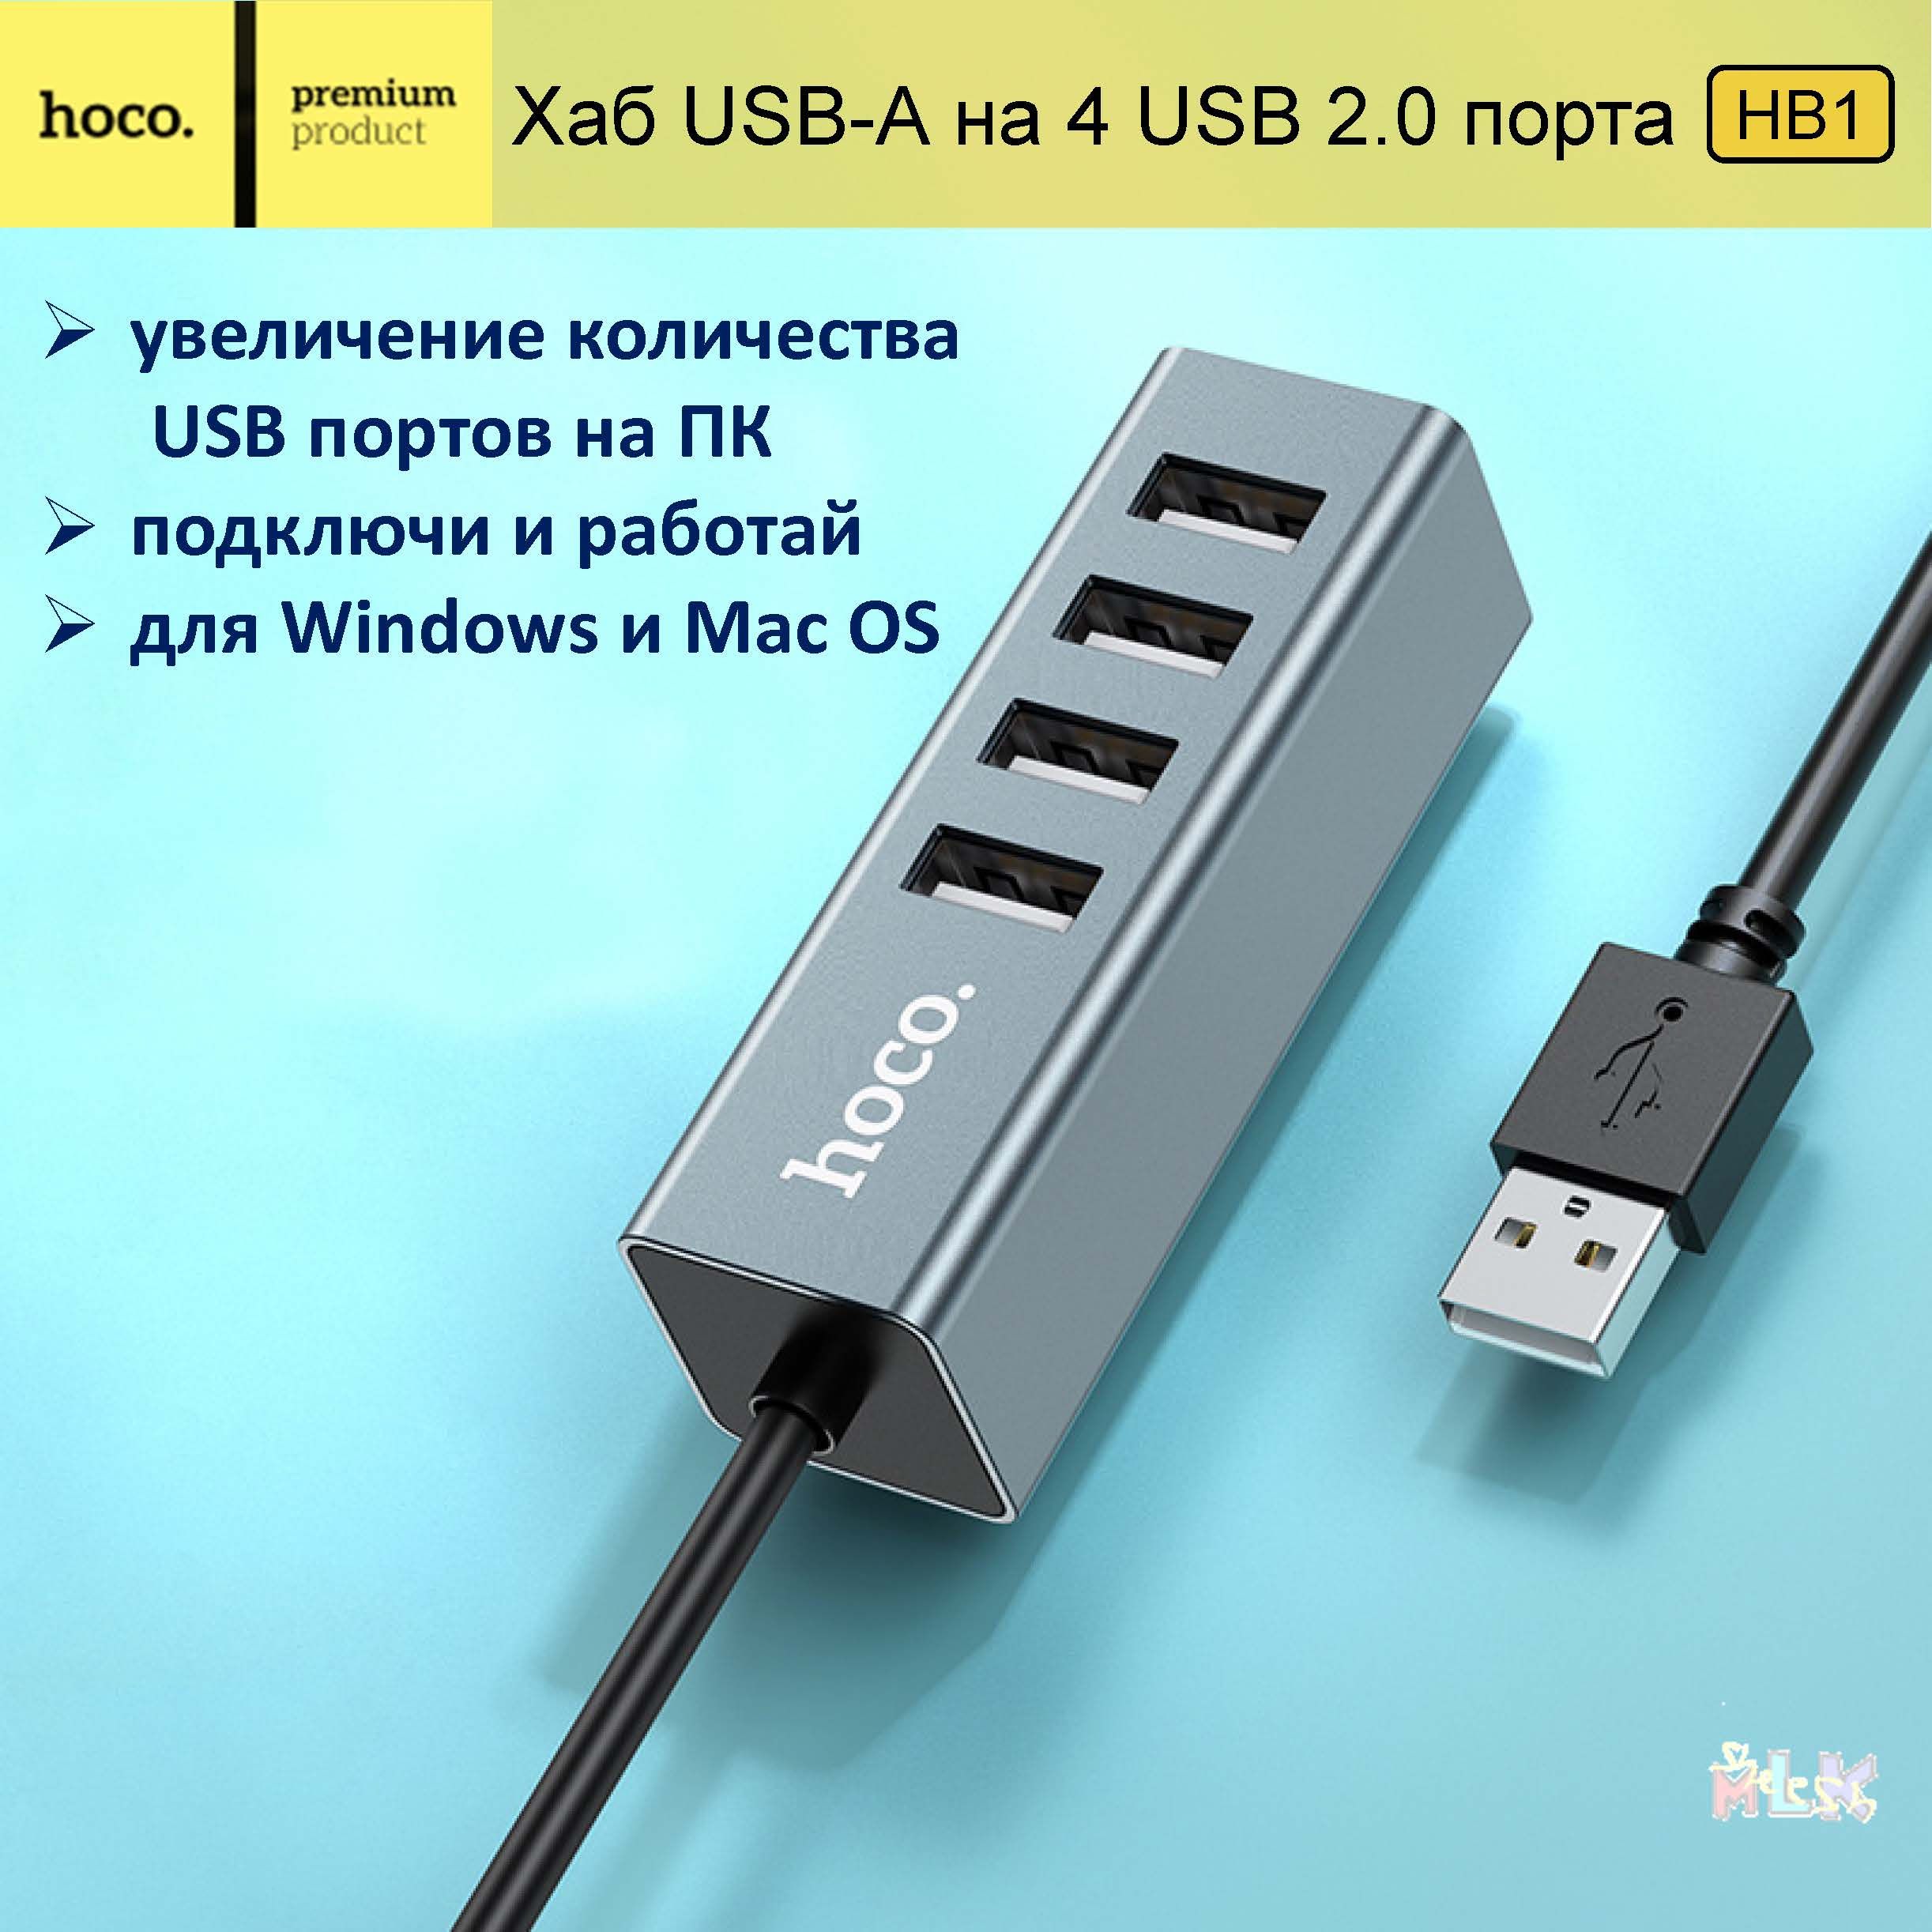 USBHUB(переходник-разветвитель,хабUSB)hocoHB1,USBType-A,USBХабна4порта